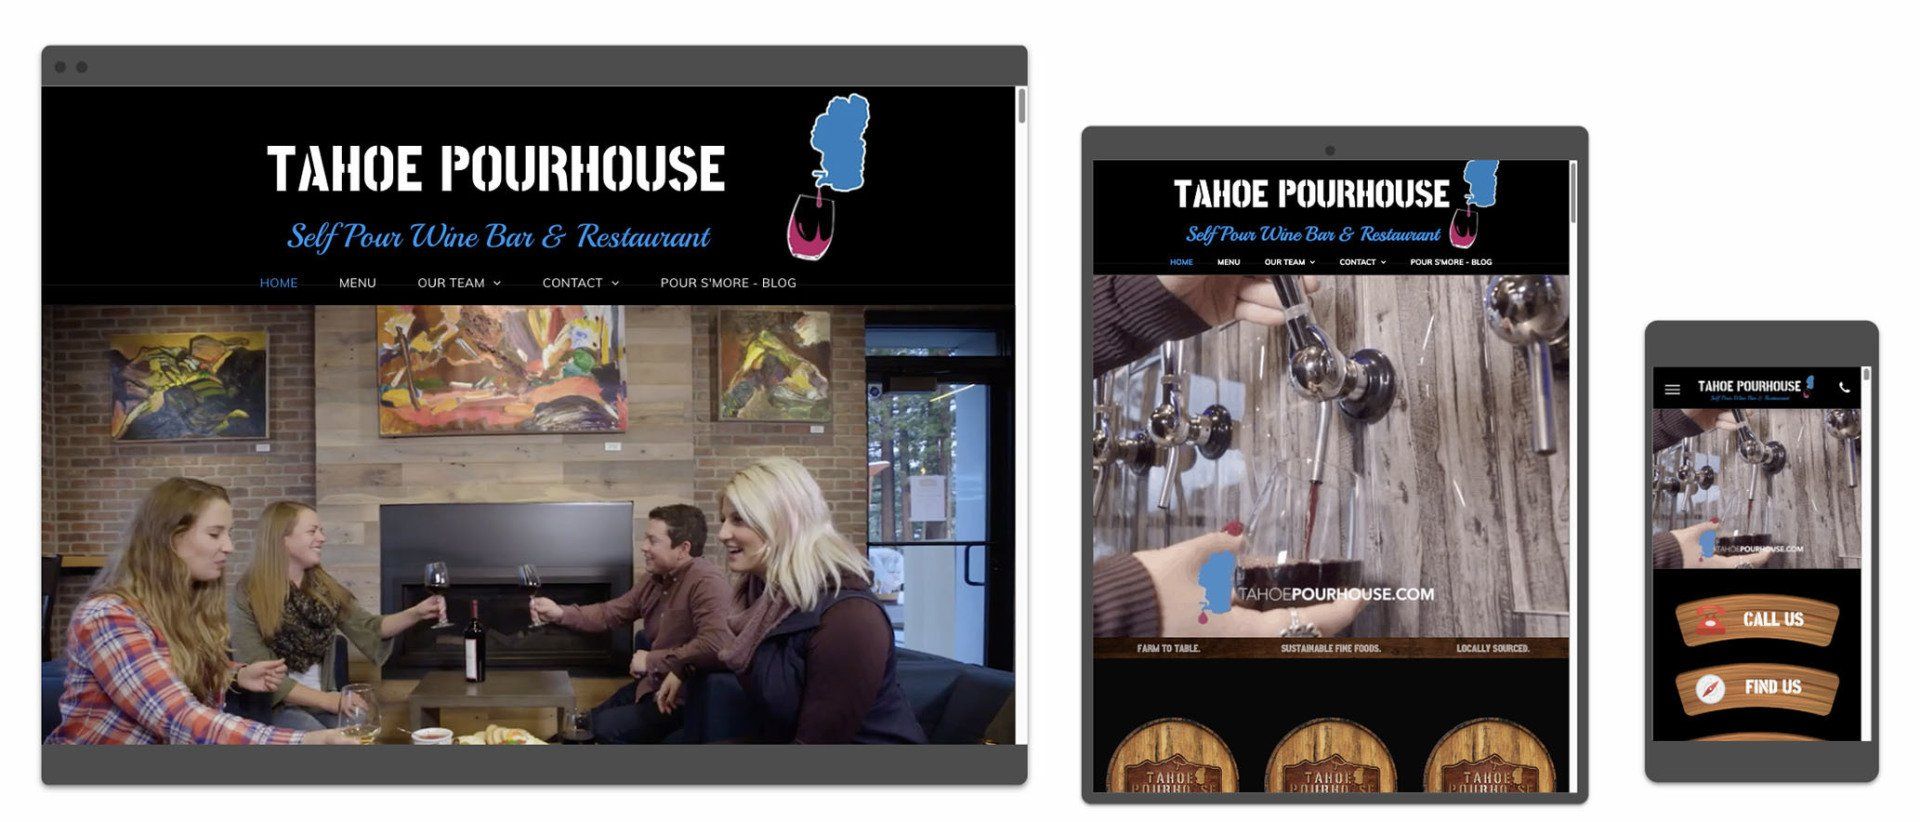 Tahoe Pourhouse website image